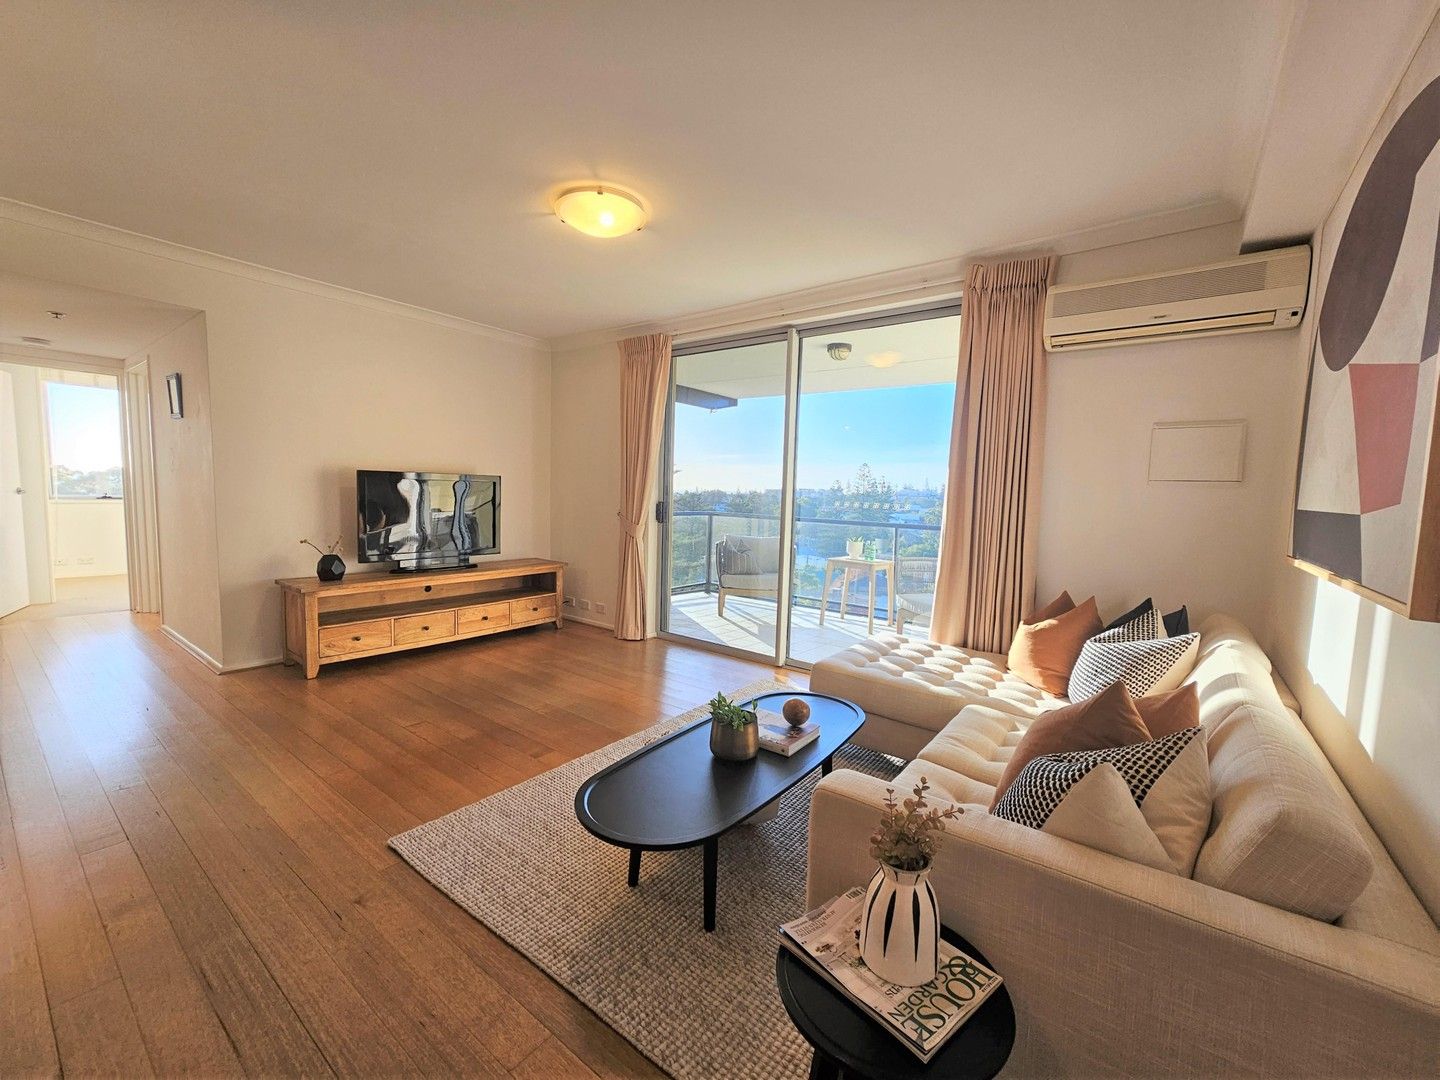 2 bedrooms Apartment / Unit / Flat in 53/10 Wellington Street MOSMAN PARK WA, 6012